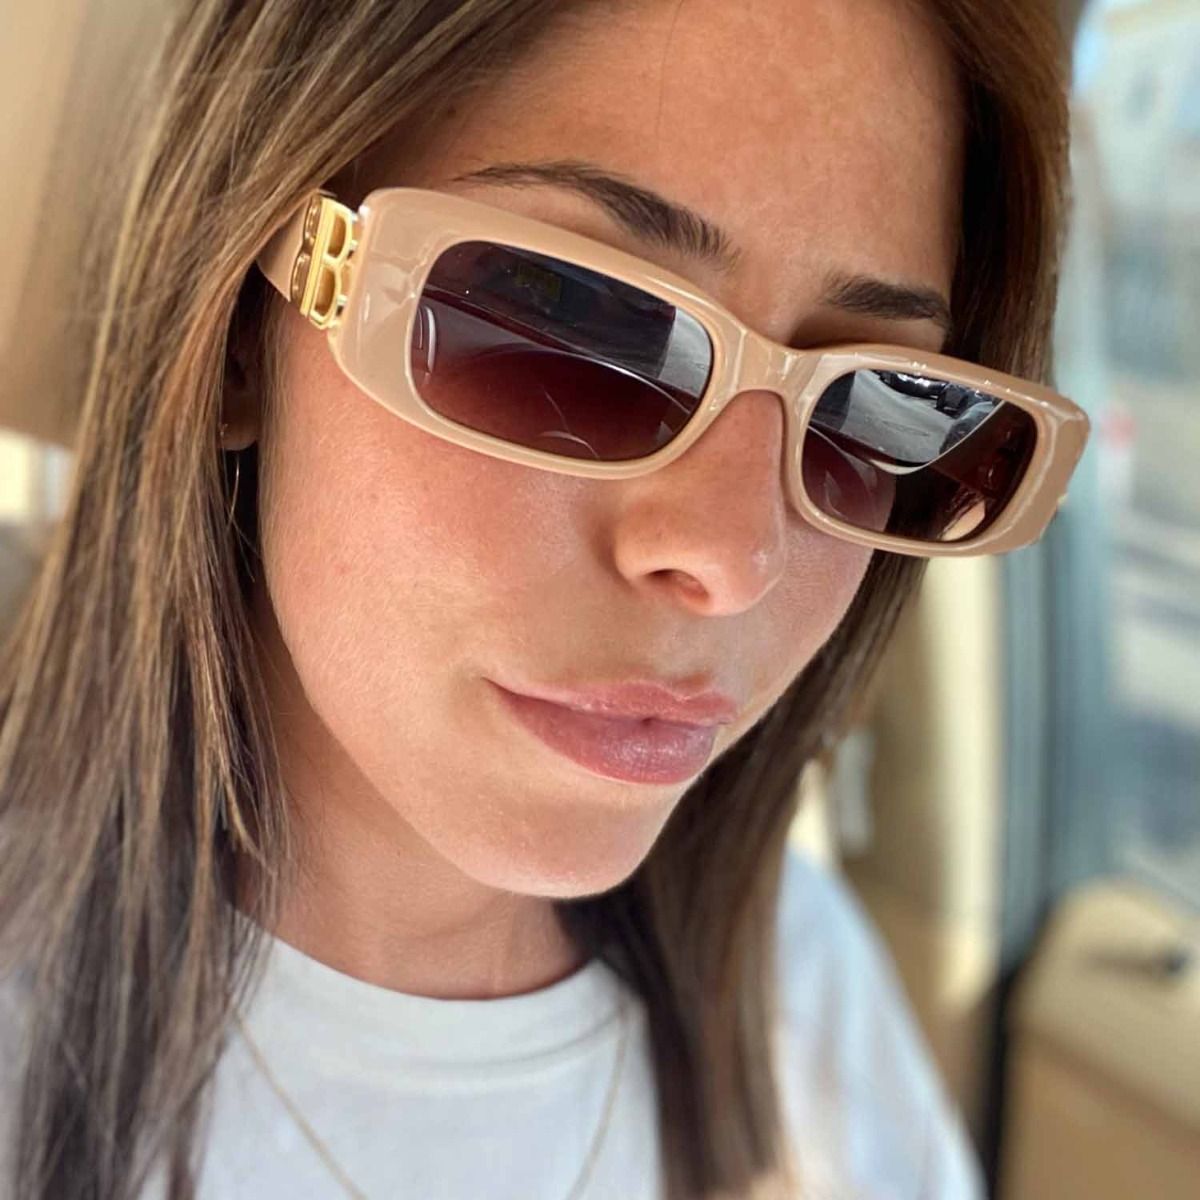 Gold double B hinge luxury celebrity trendy sunglasses